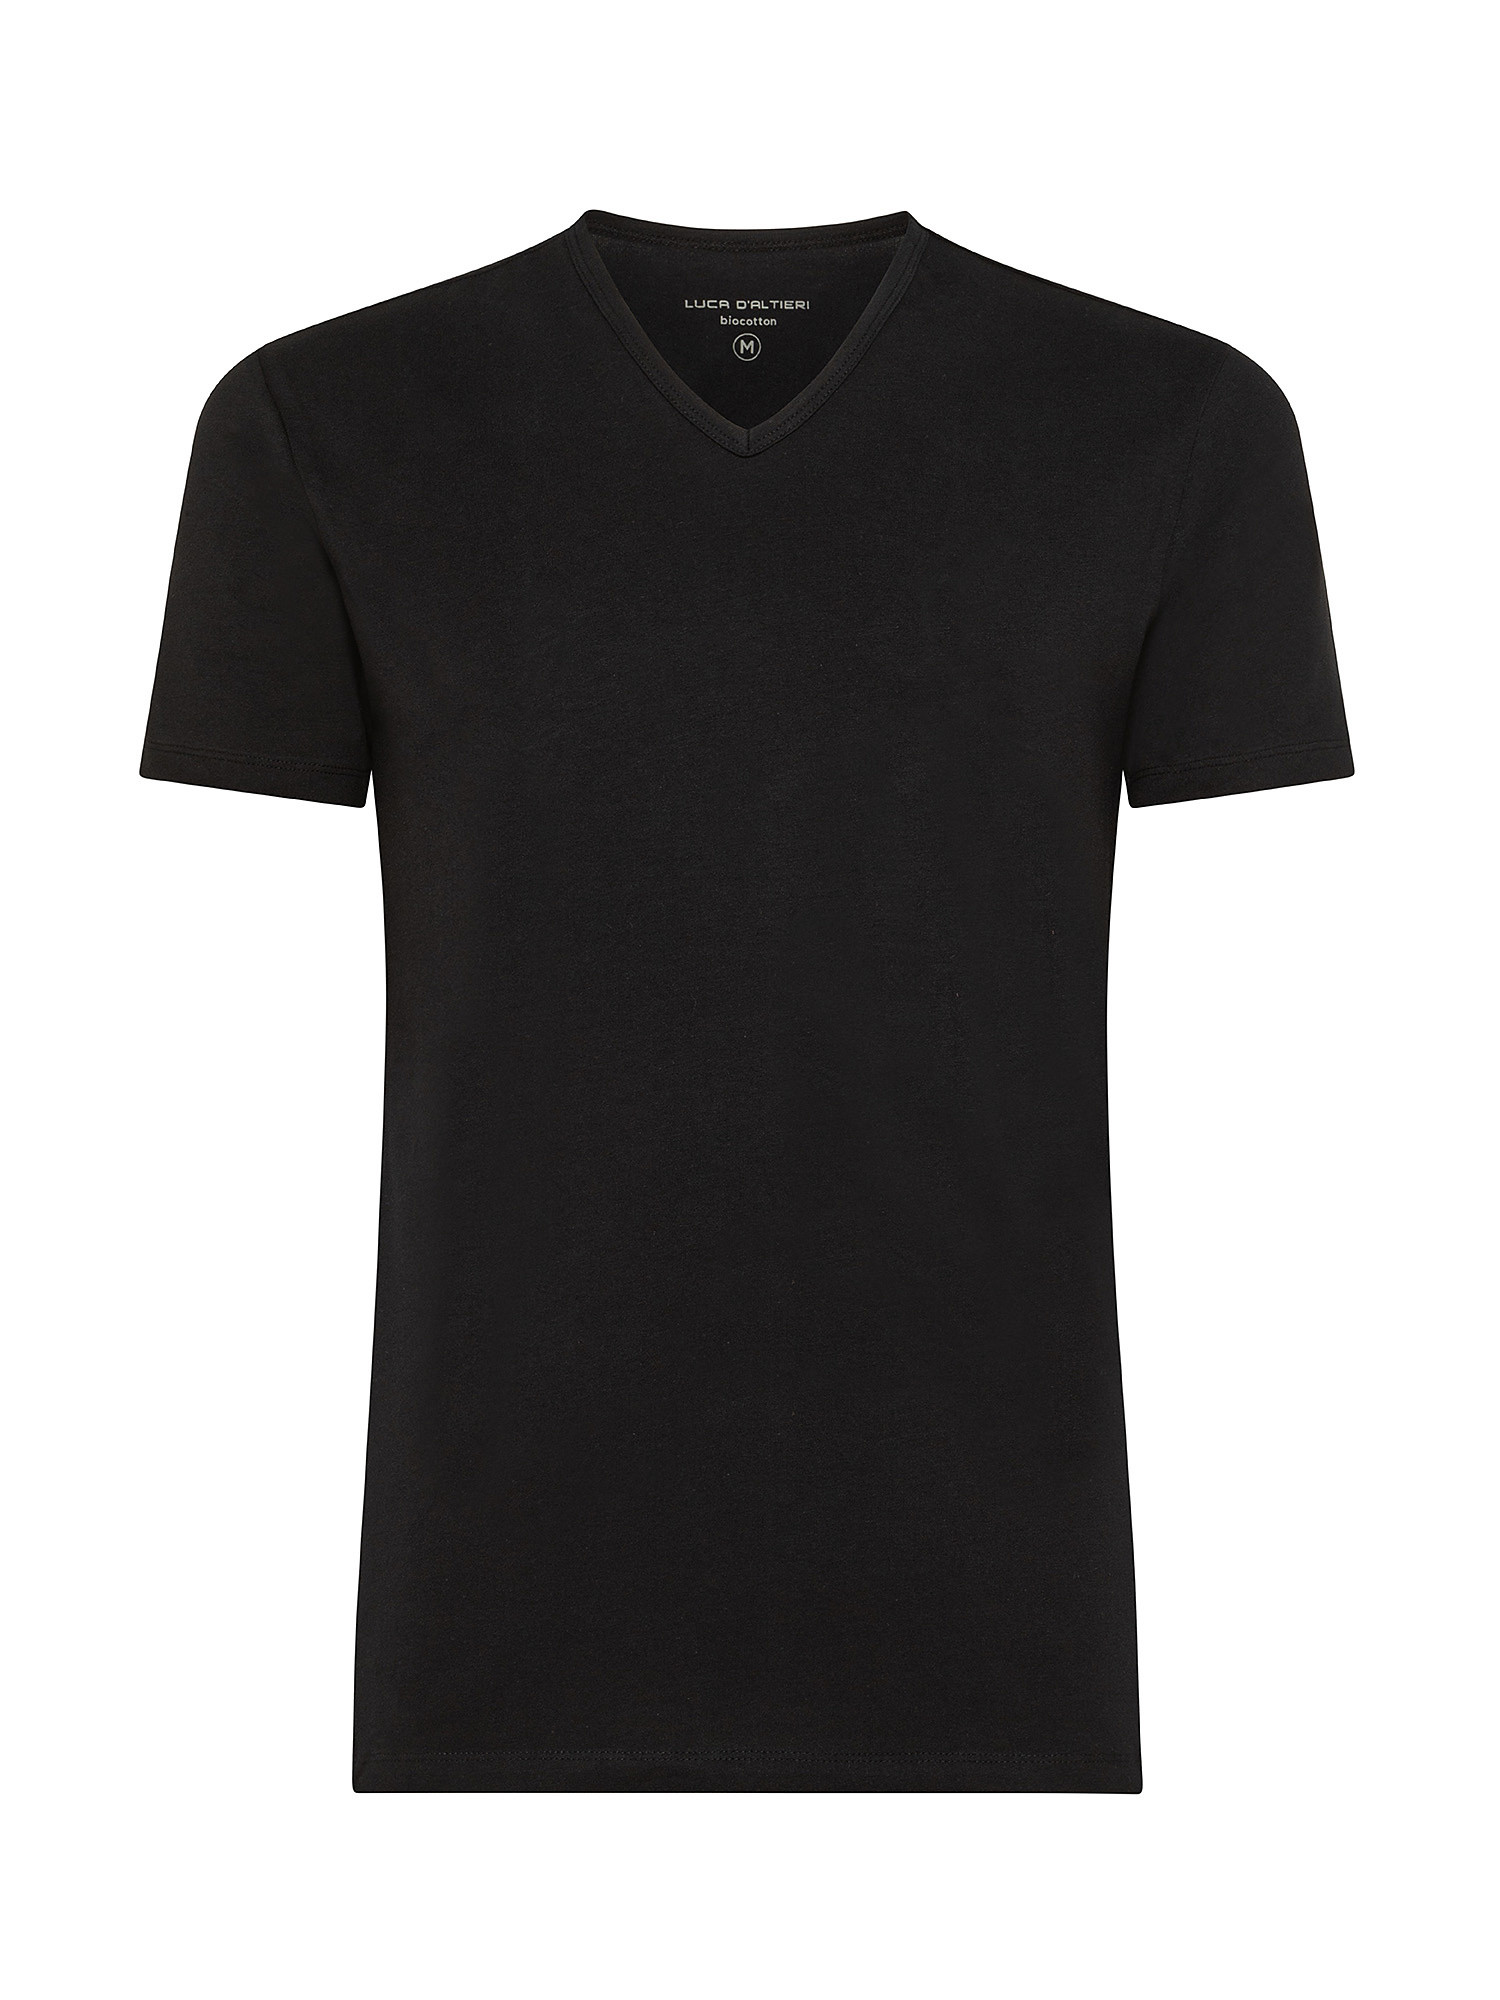 Luca D'Altieri - Set 2 t-shirt, Nero, large image number 0